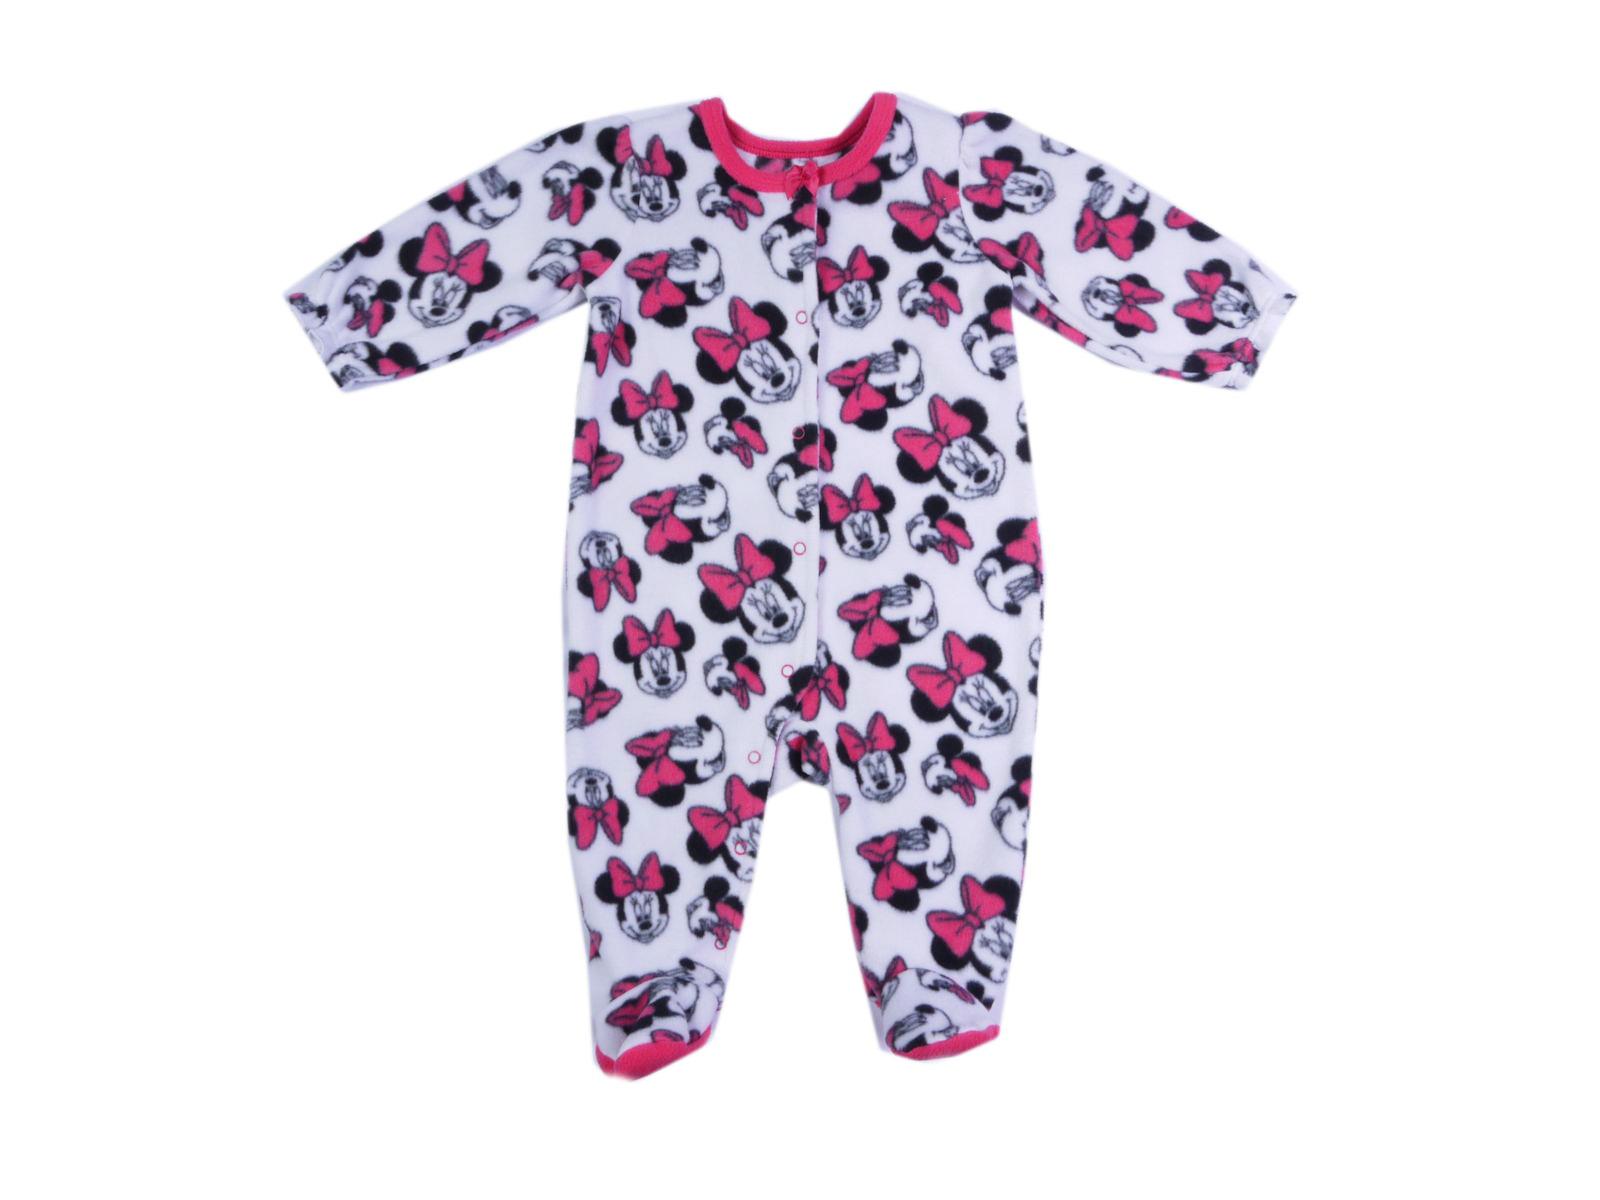 Disney Newborn & Infant Girl's Printed Footed Sleeper Pajamas - Minnie Mouse